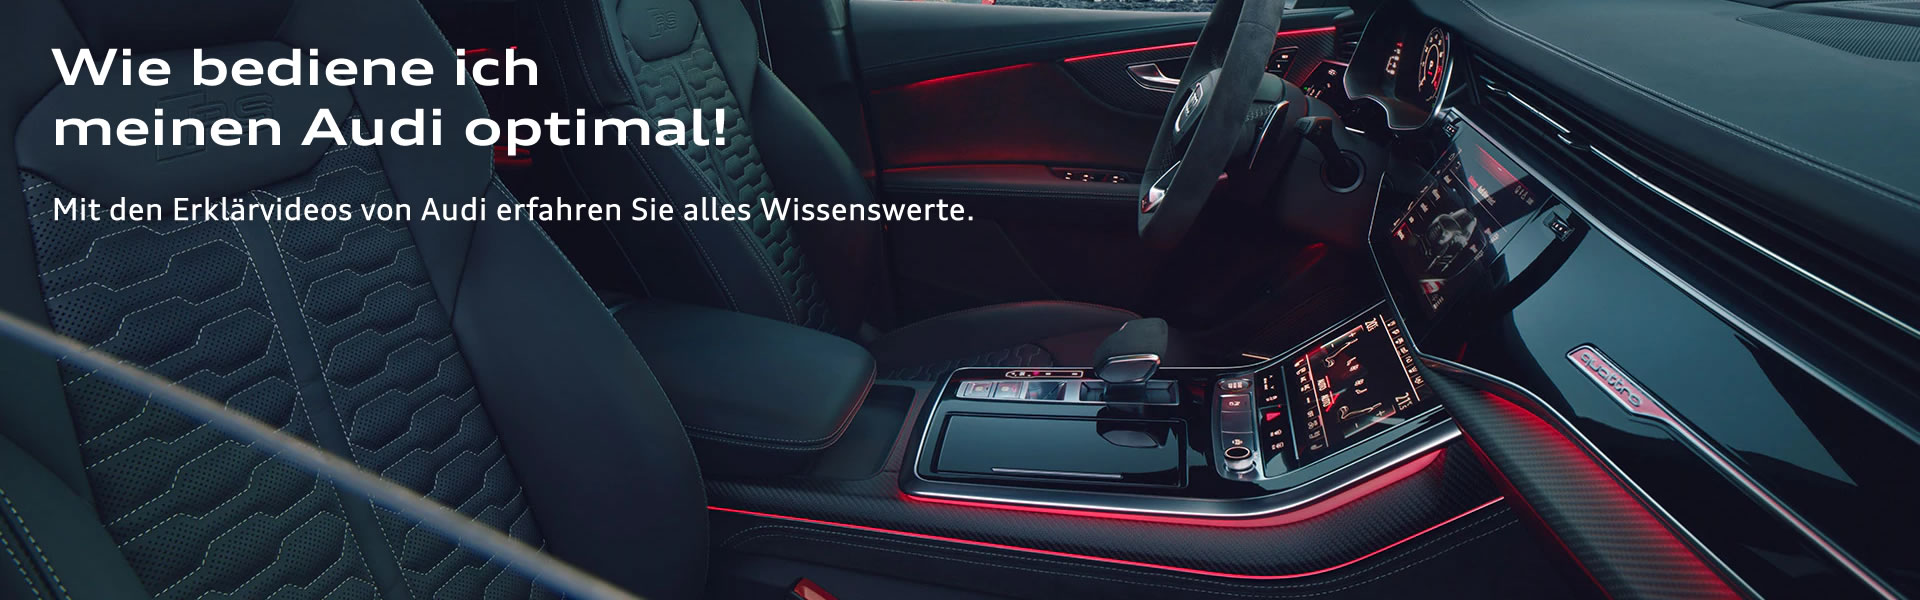 Autohaus Wiedmann Audi Videos